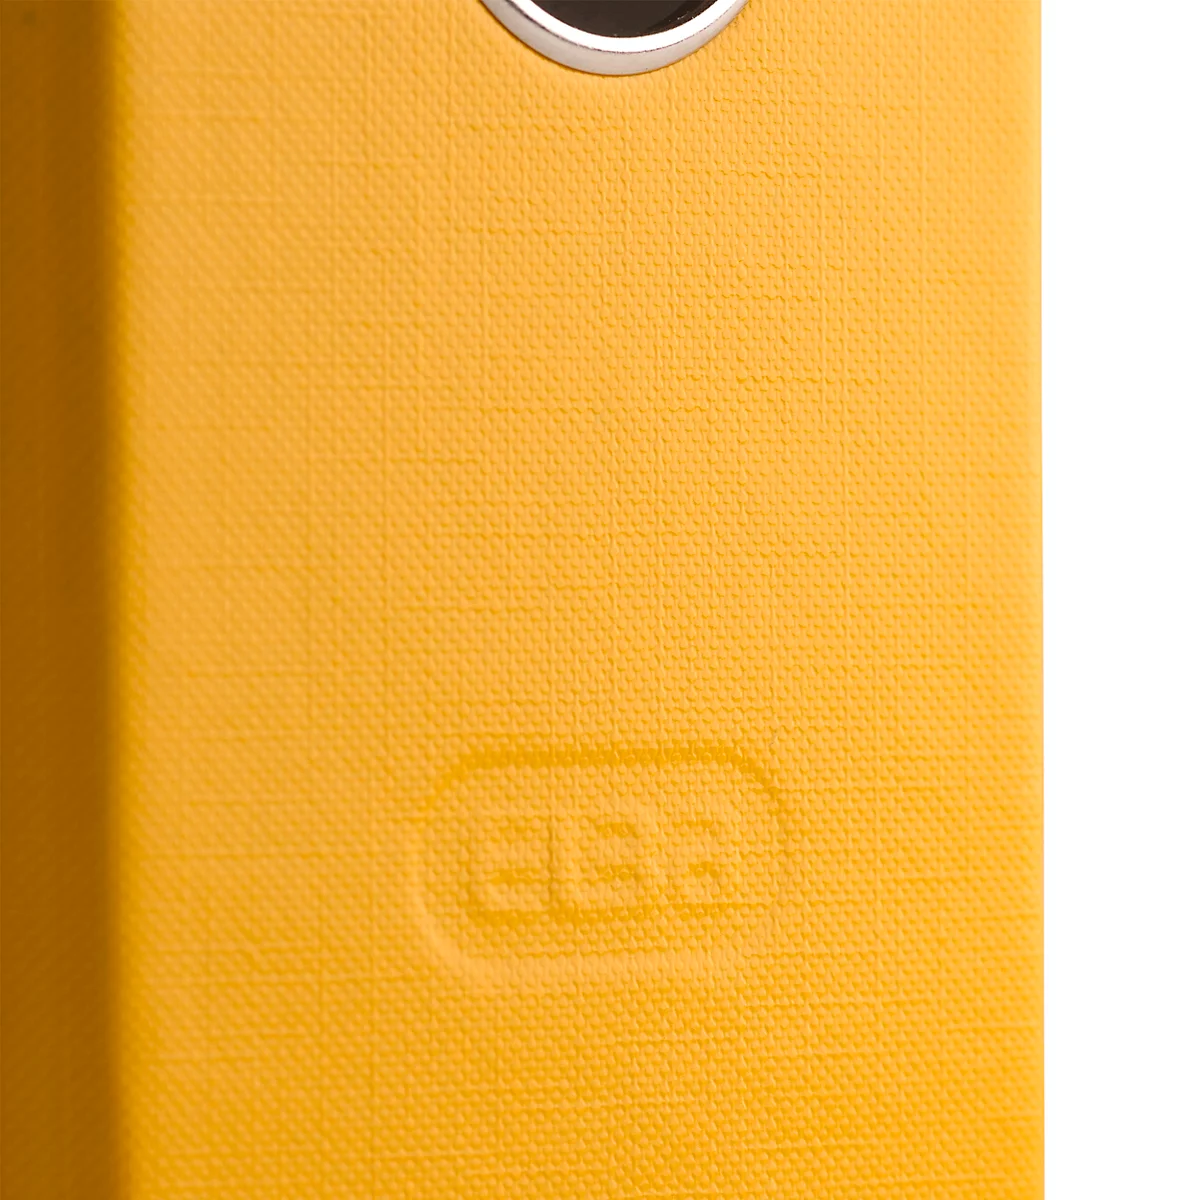 ELBA Ordner smart, DIN A4, Rückenbreite 80 mm, 10 Stück, gelb